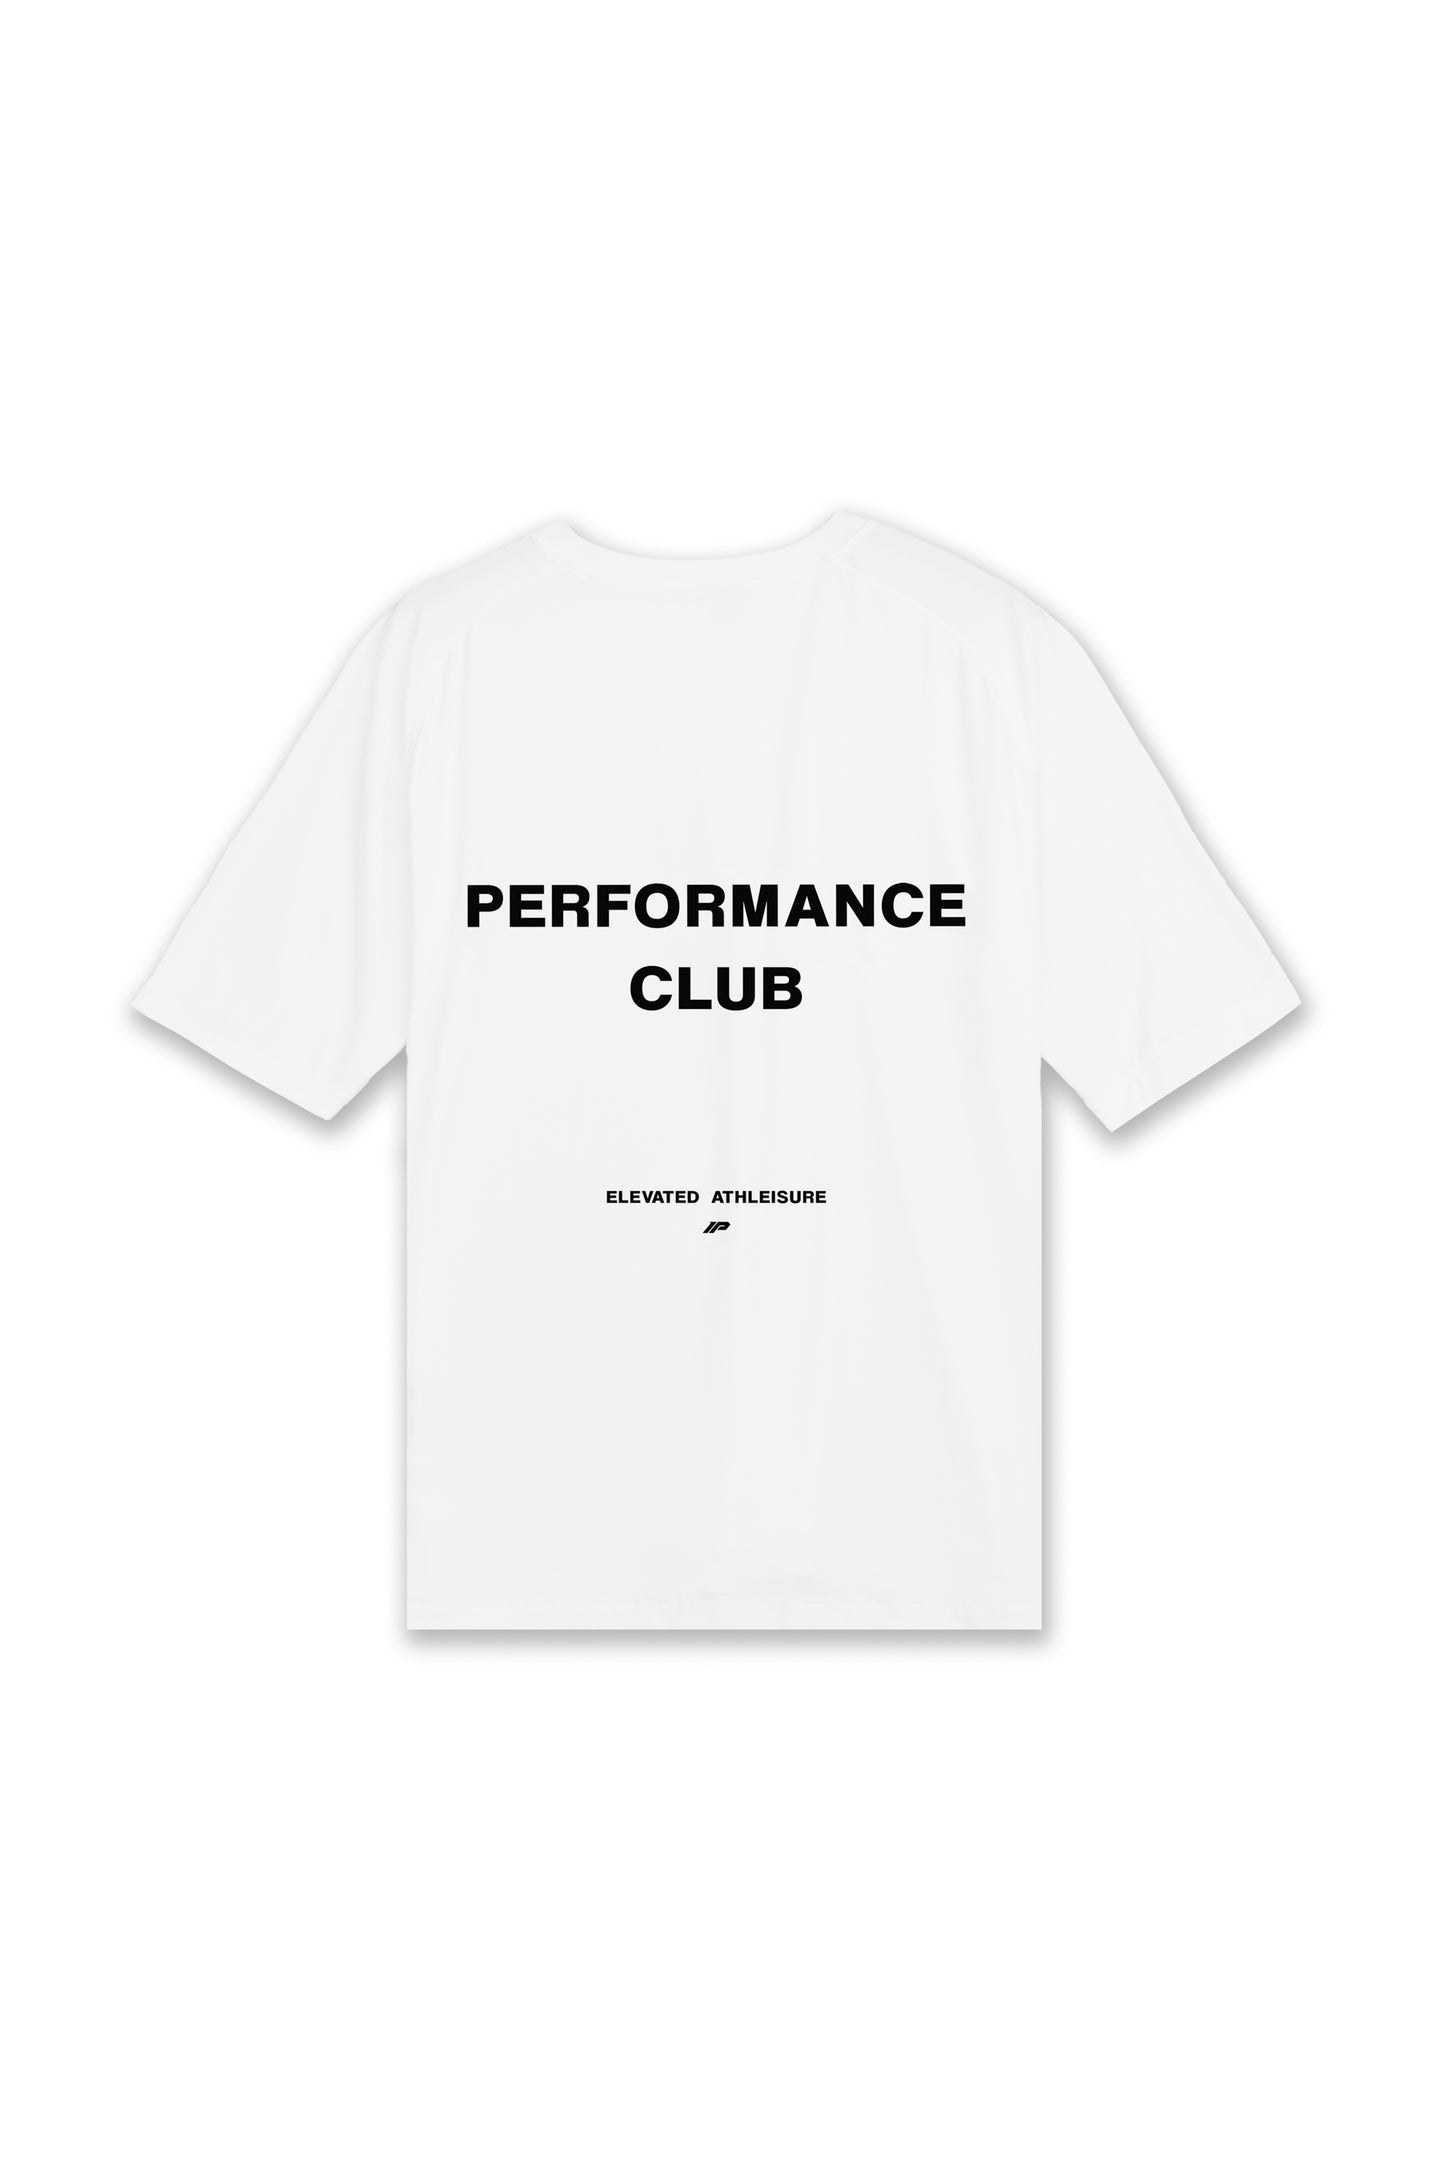 PERFORMANCE CLUB TEE - WHITE